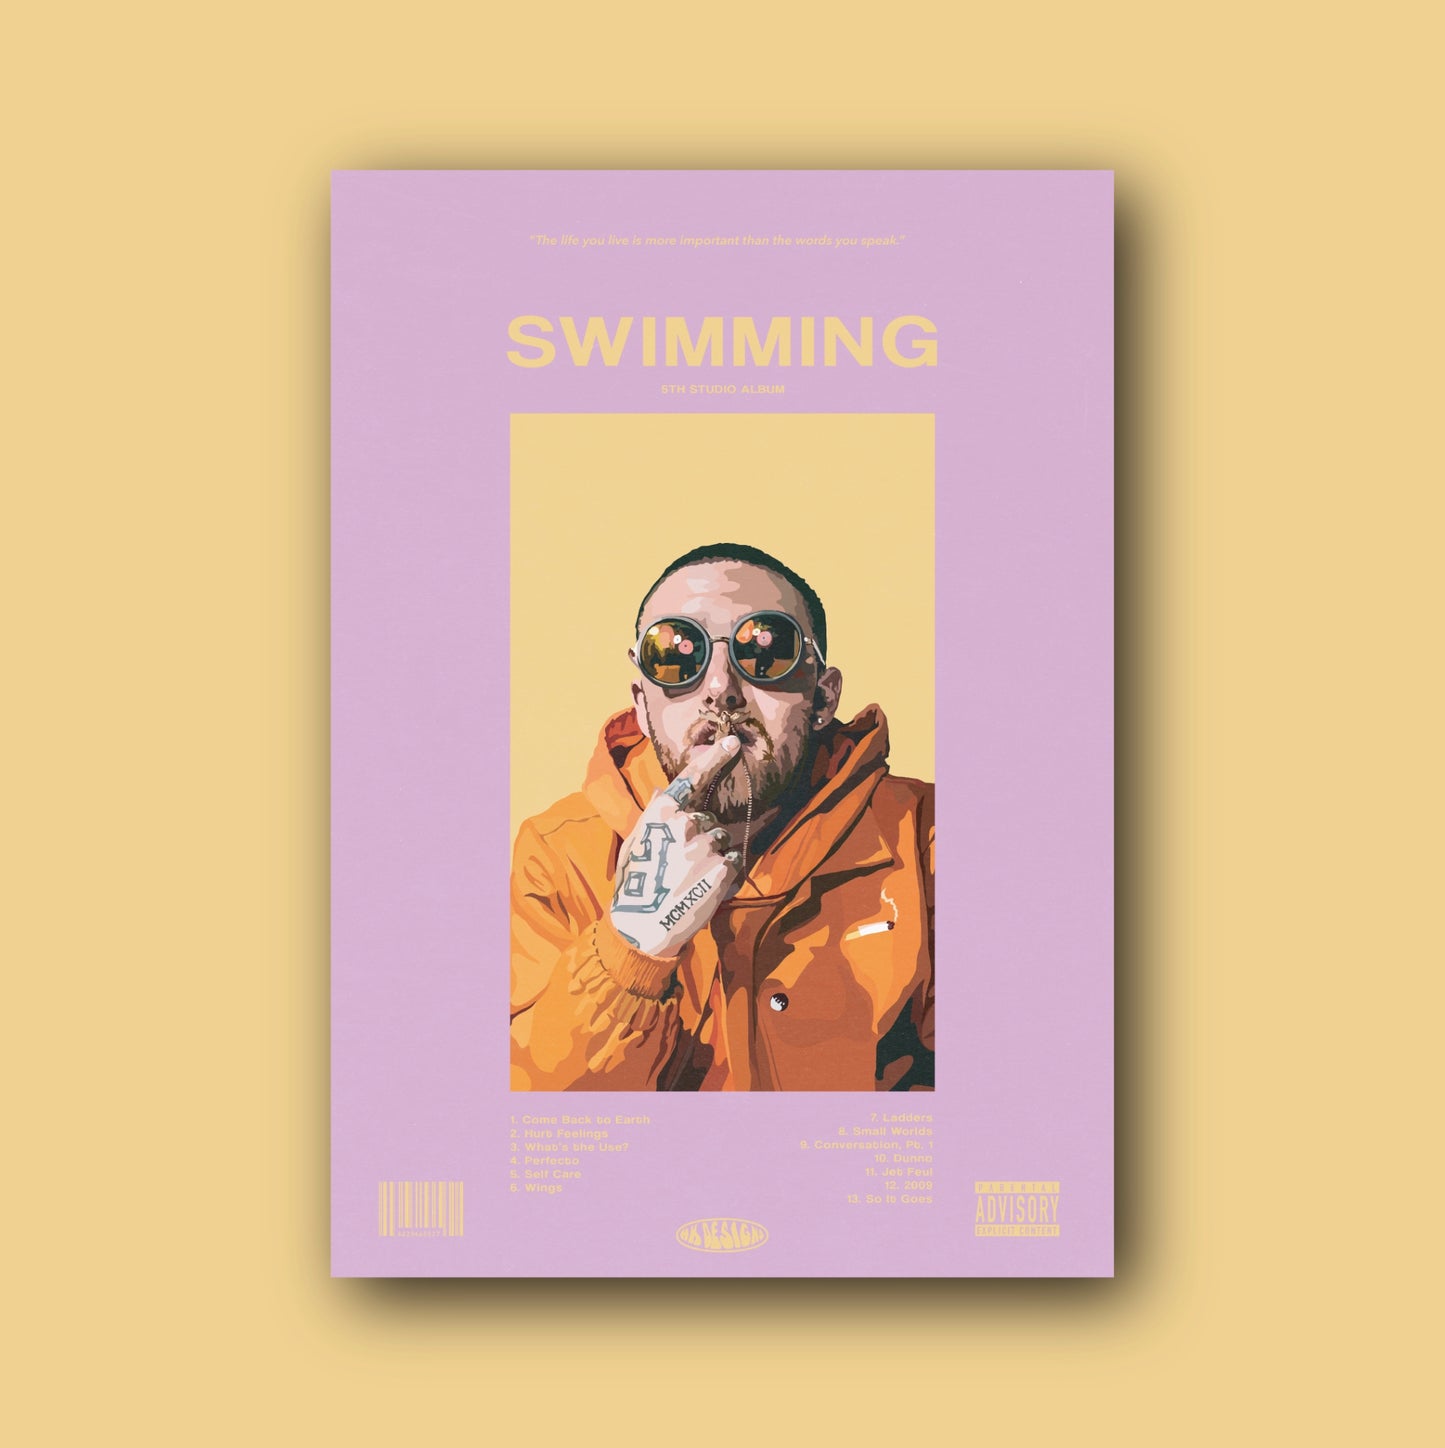 ‘Swimming’ by Mac Miller